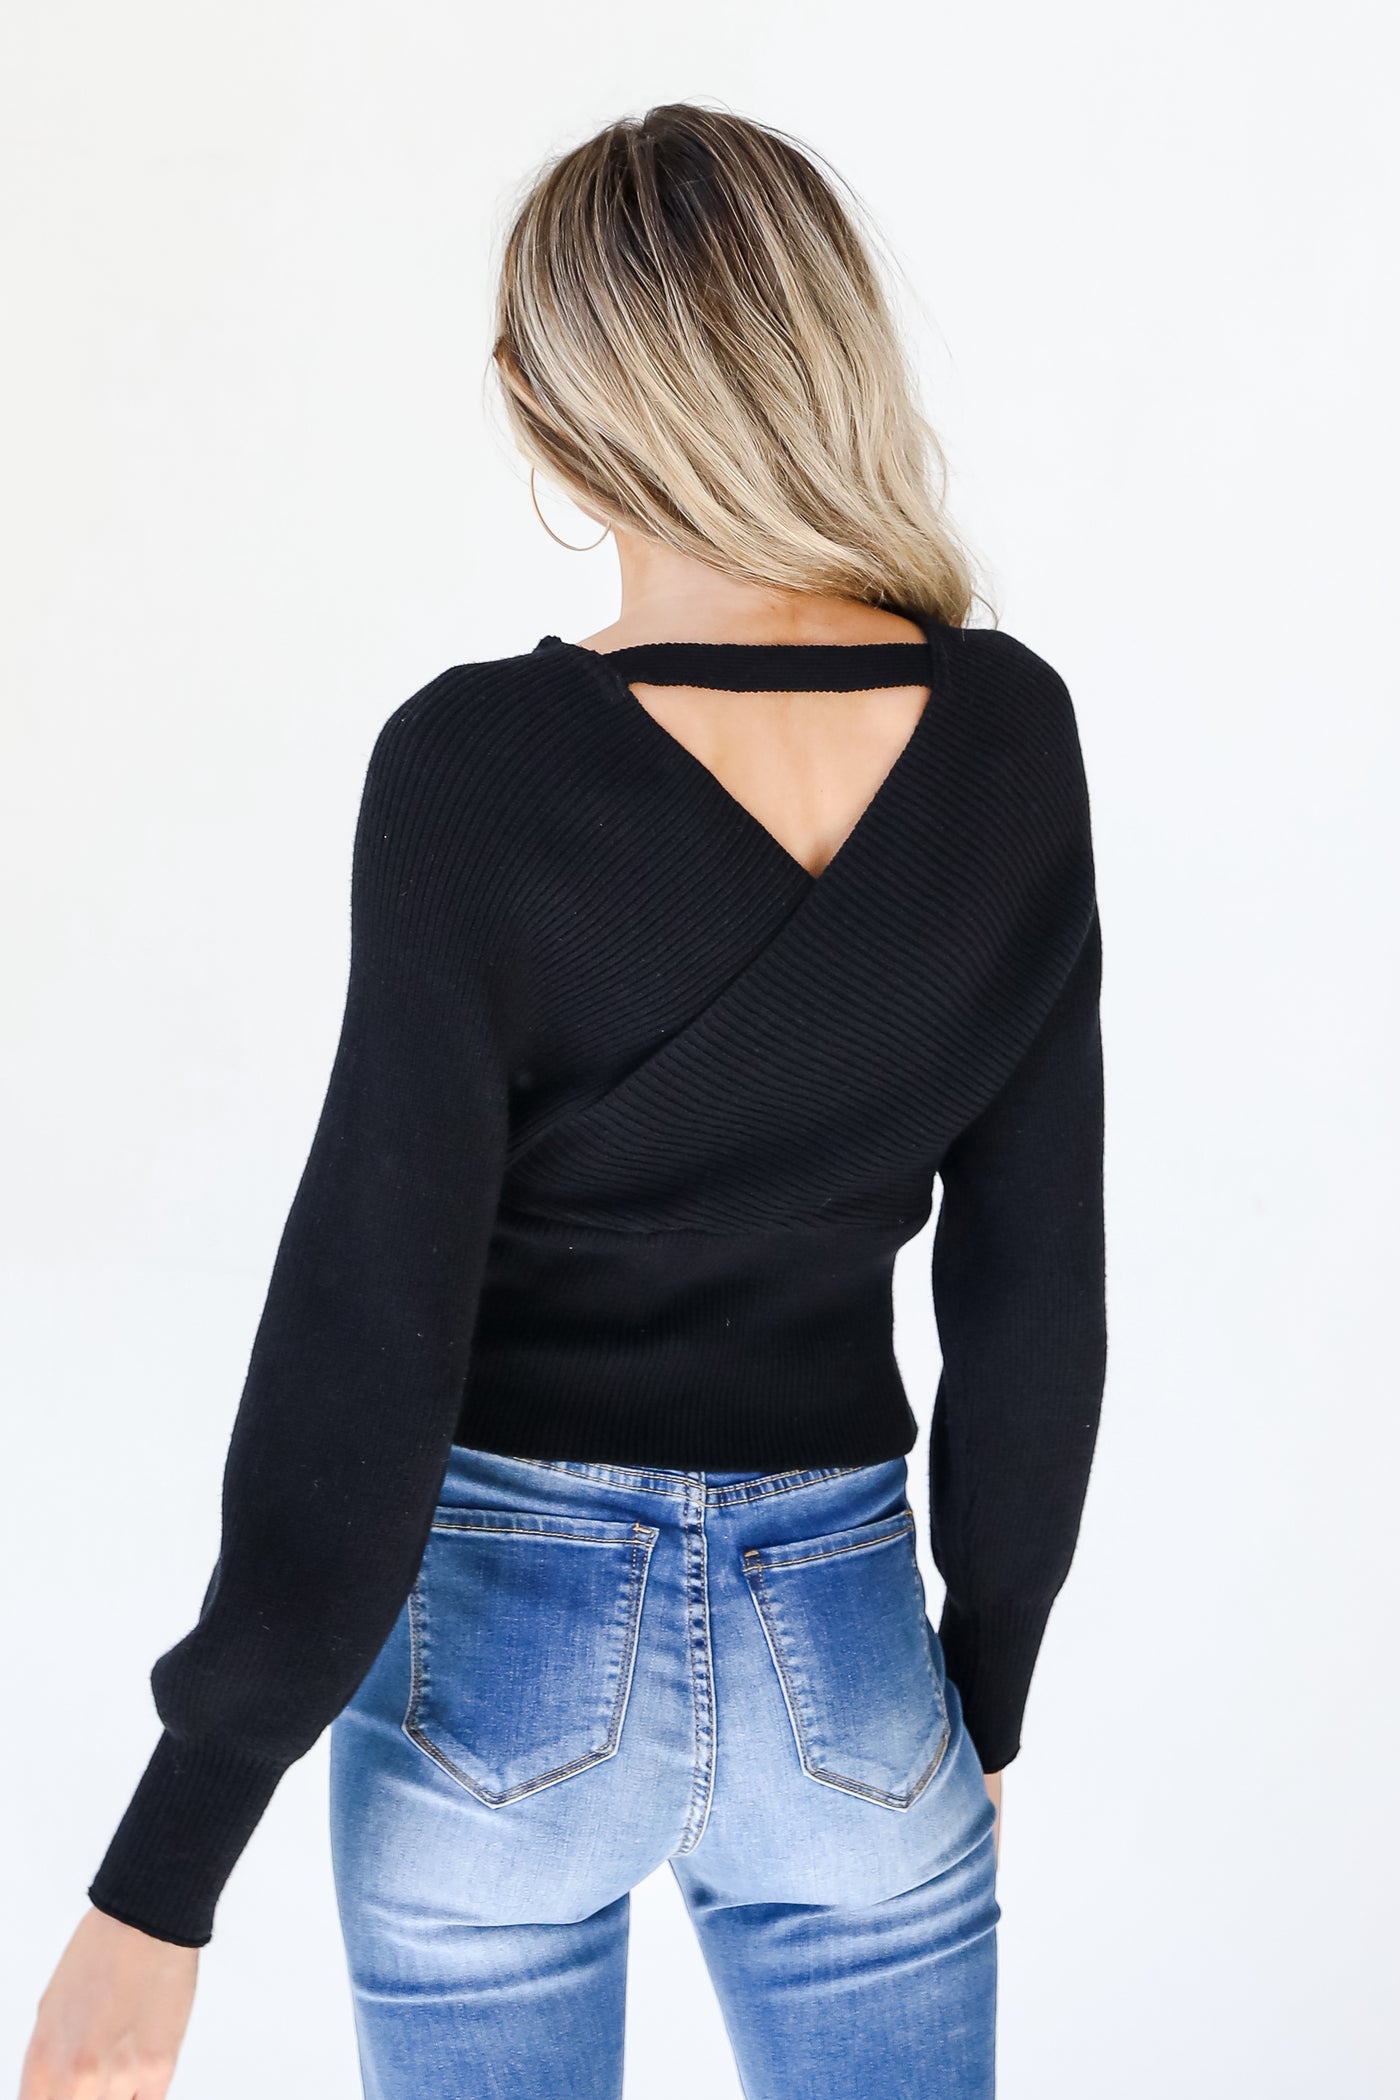 Surplice Sweater in black back view